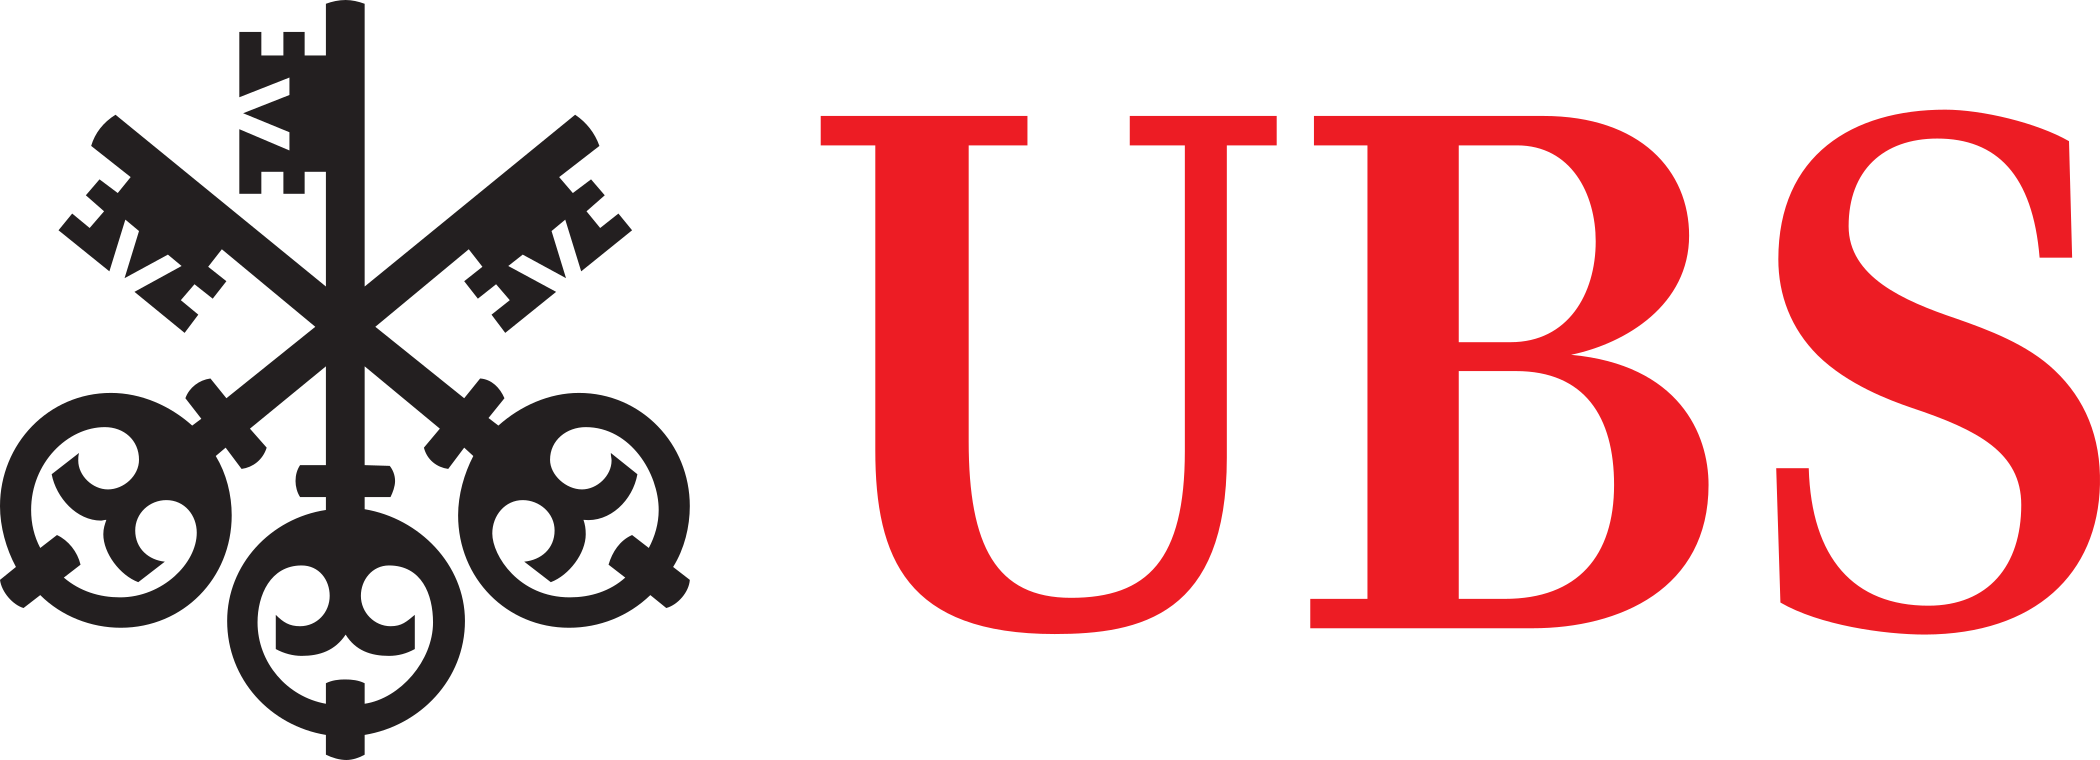 ubs logo 1 - UBS Logo